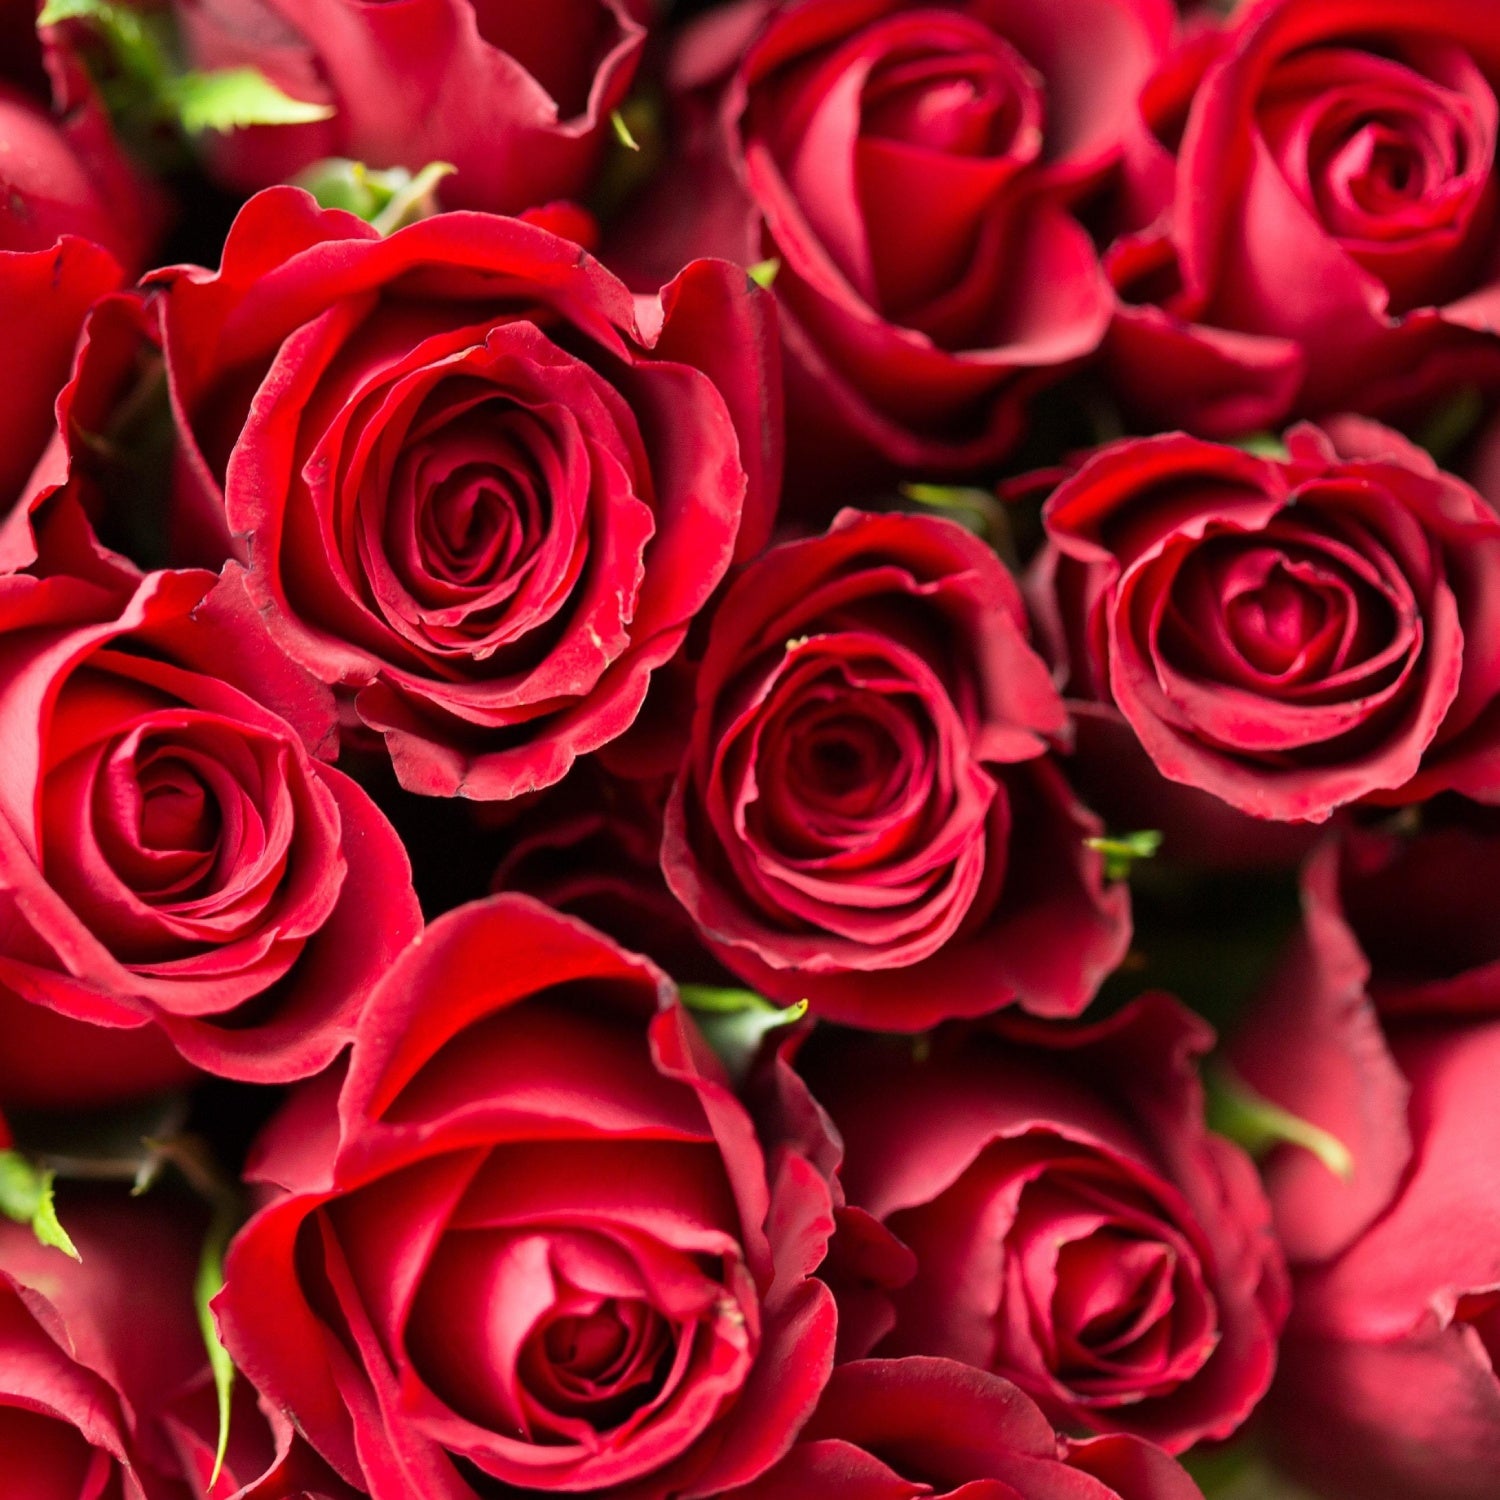 Crimson Charm Red Roses Bouquet Closeup